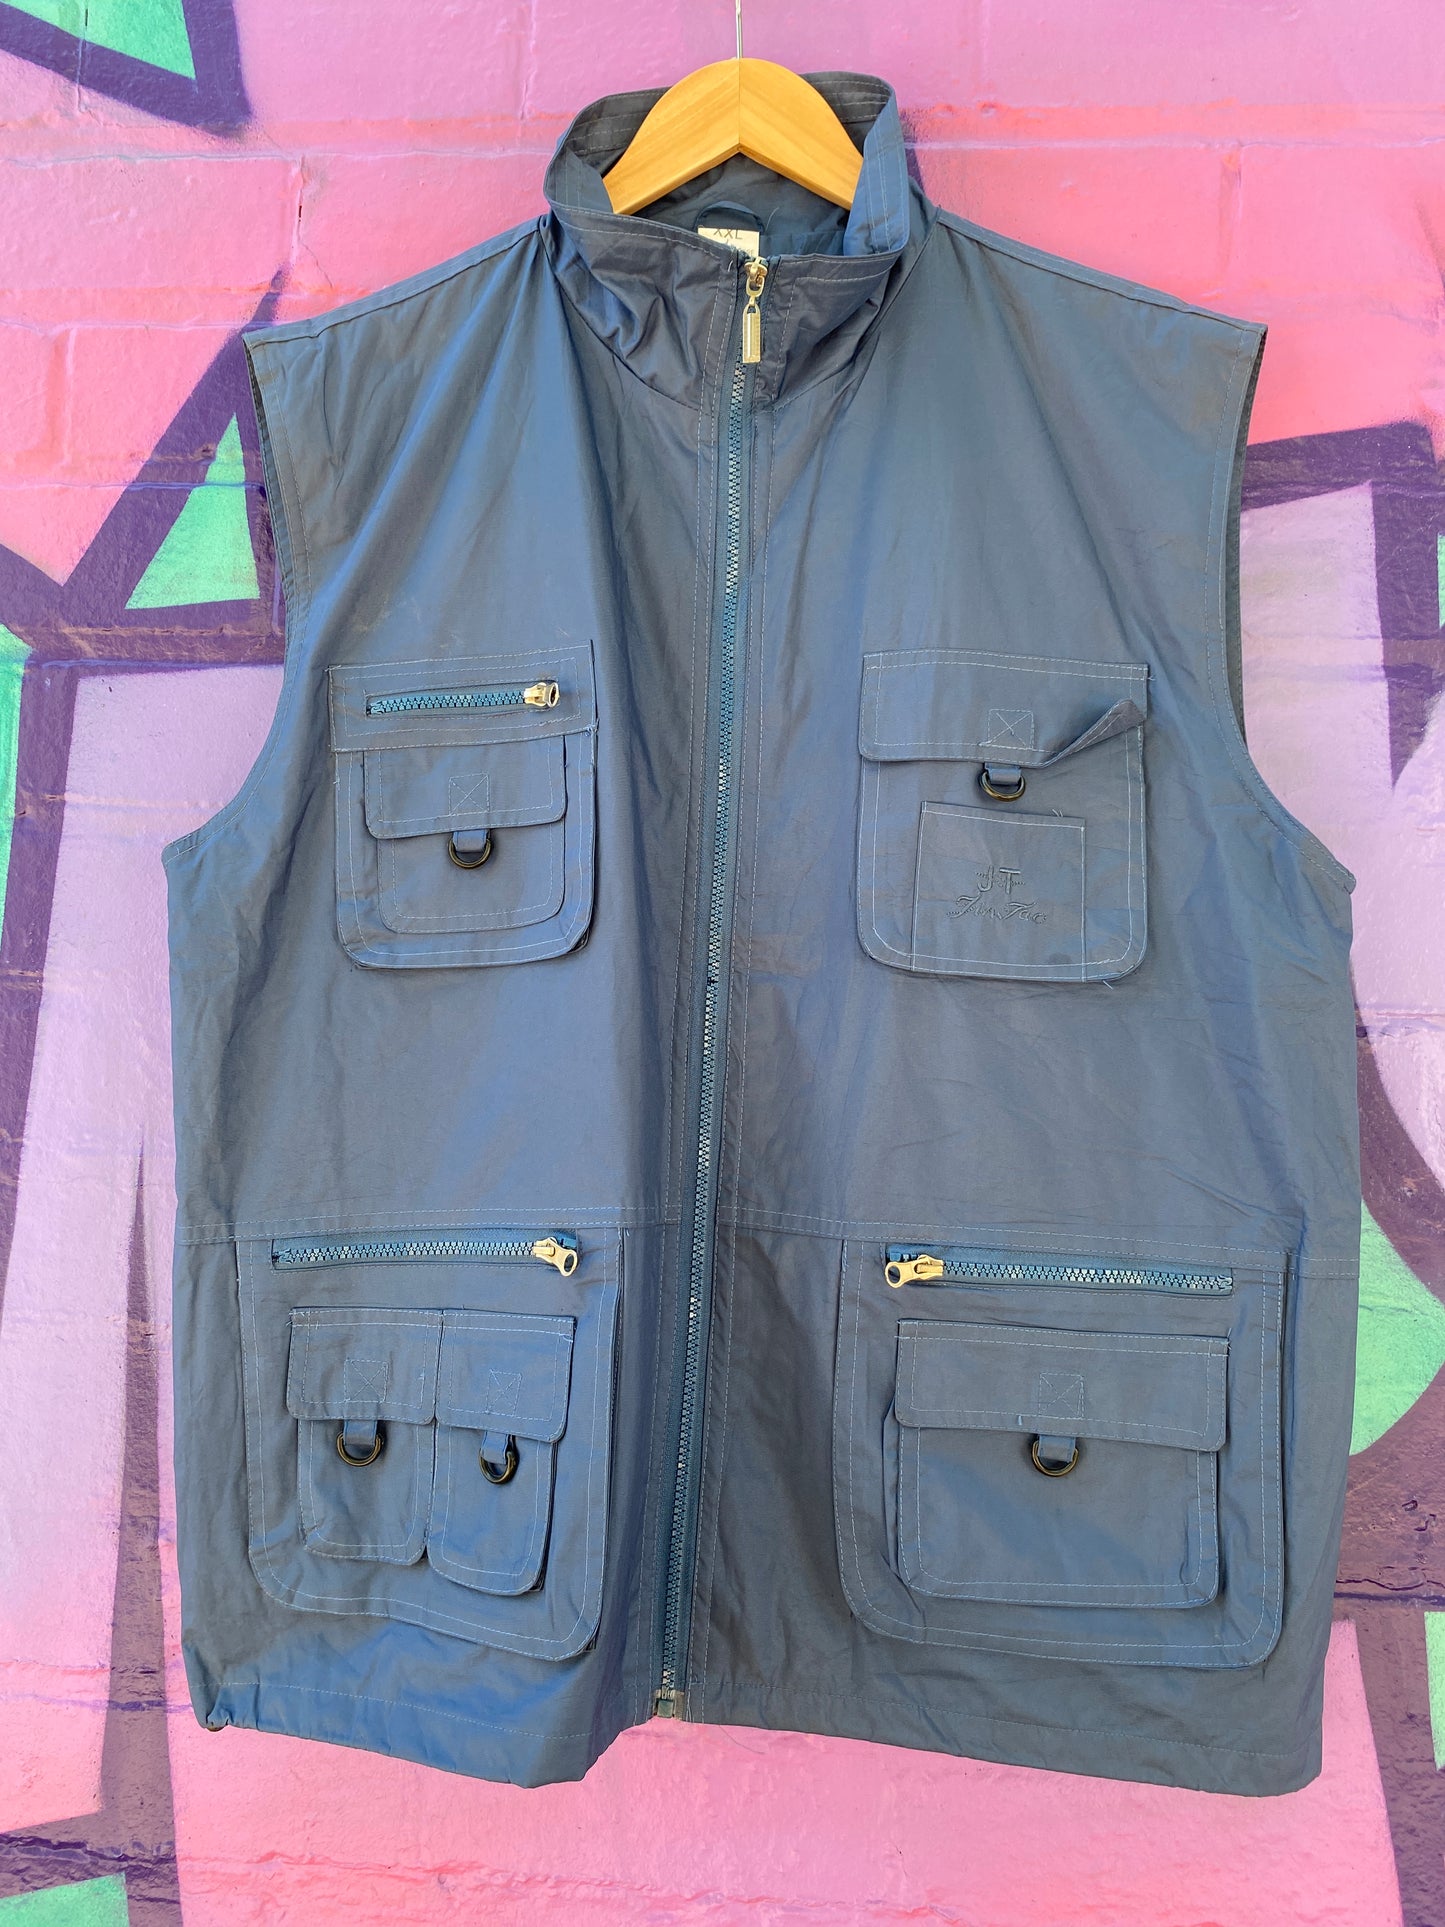 2XL - Jim Tao Plaid-Lined Blue Work Vest